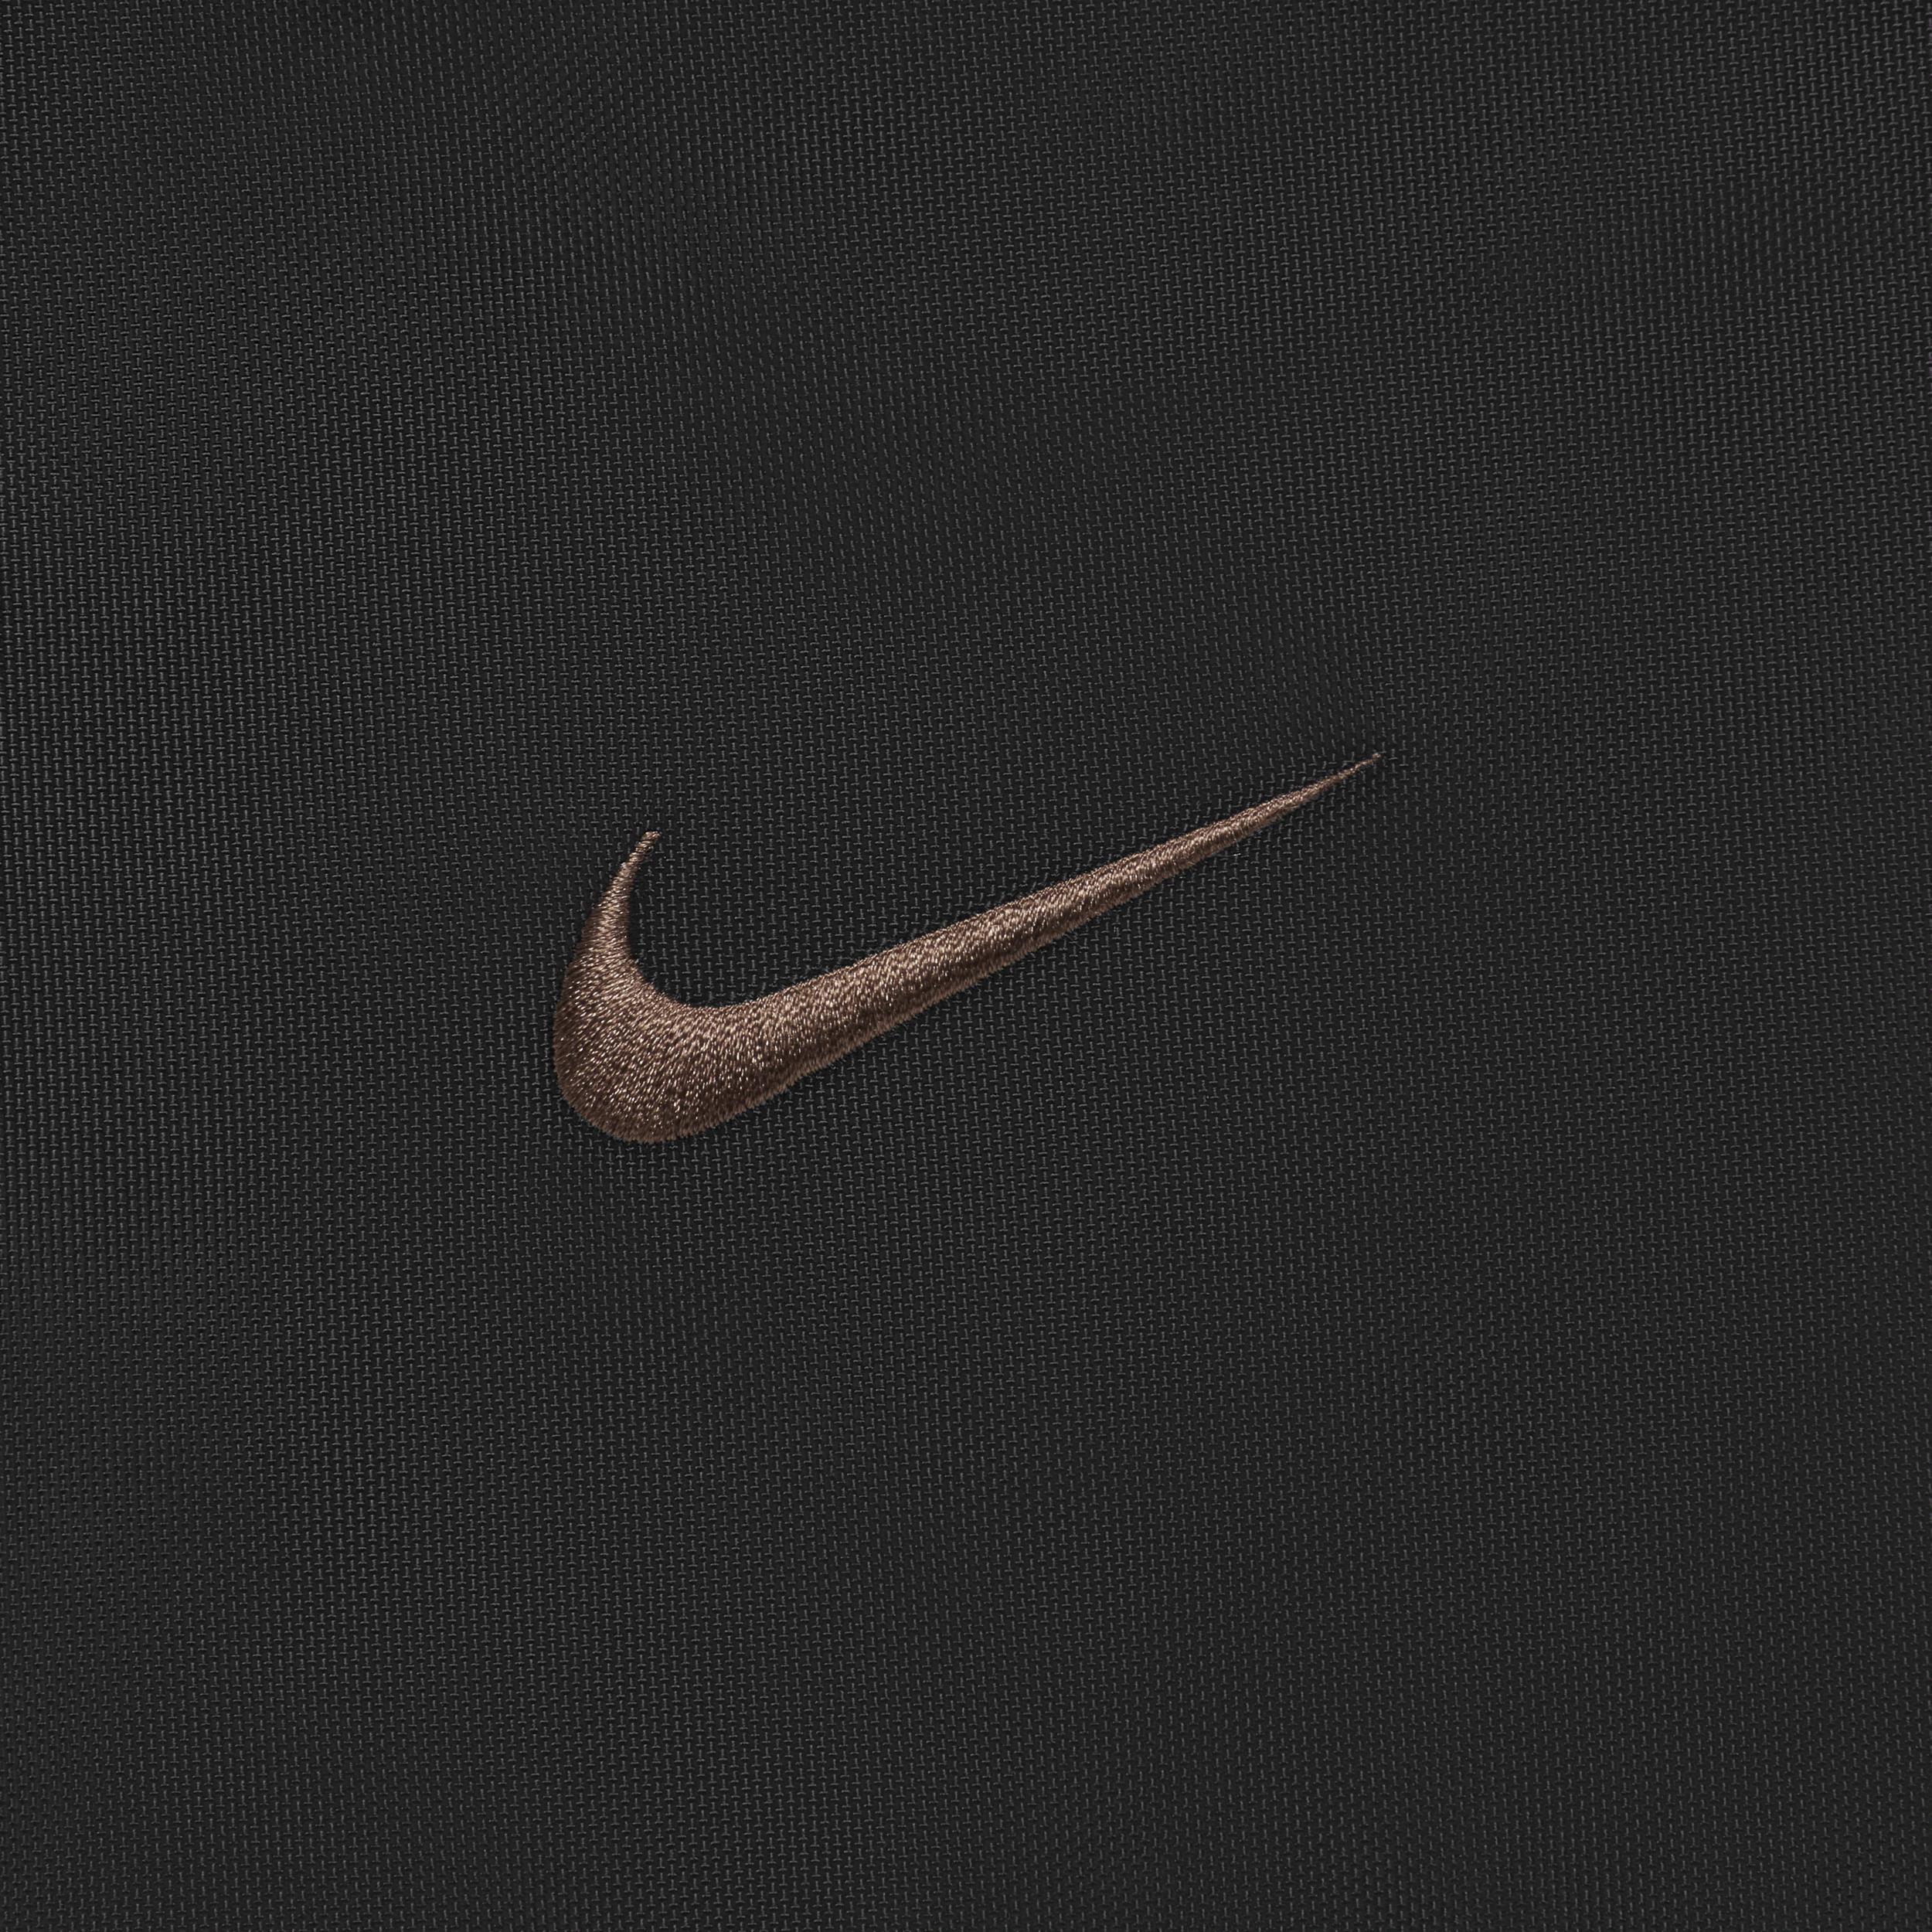 Nike Sportswear Essentials Sling Bag Product Image